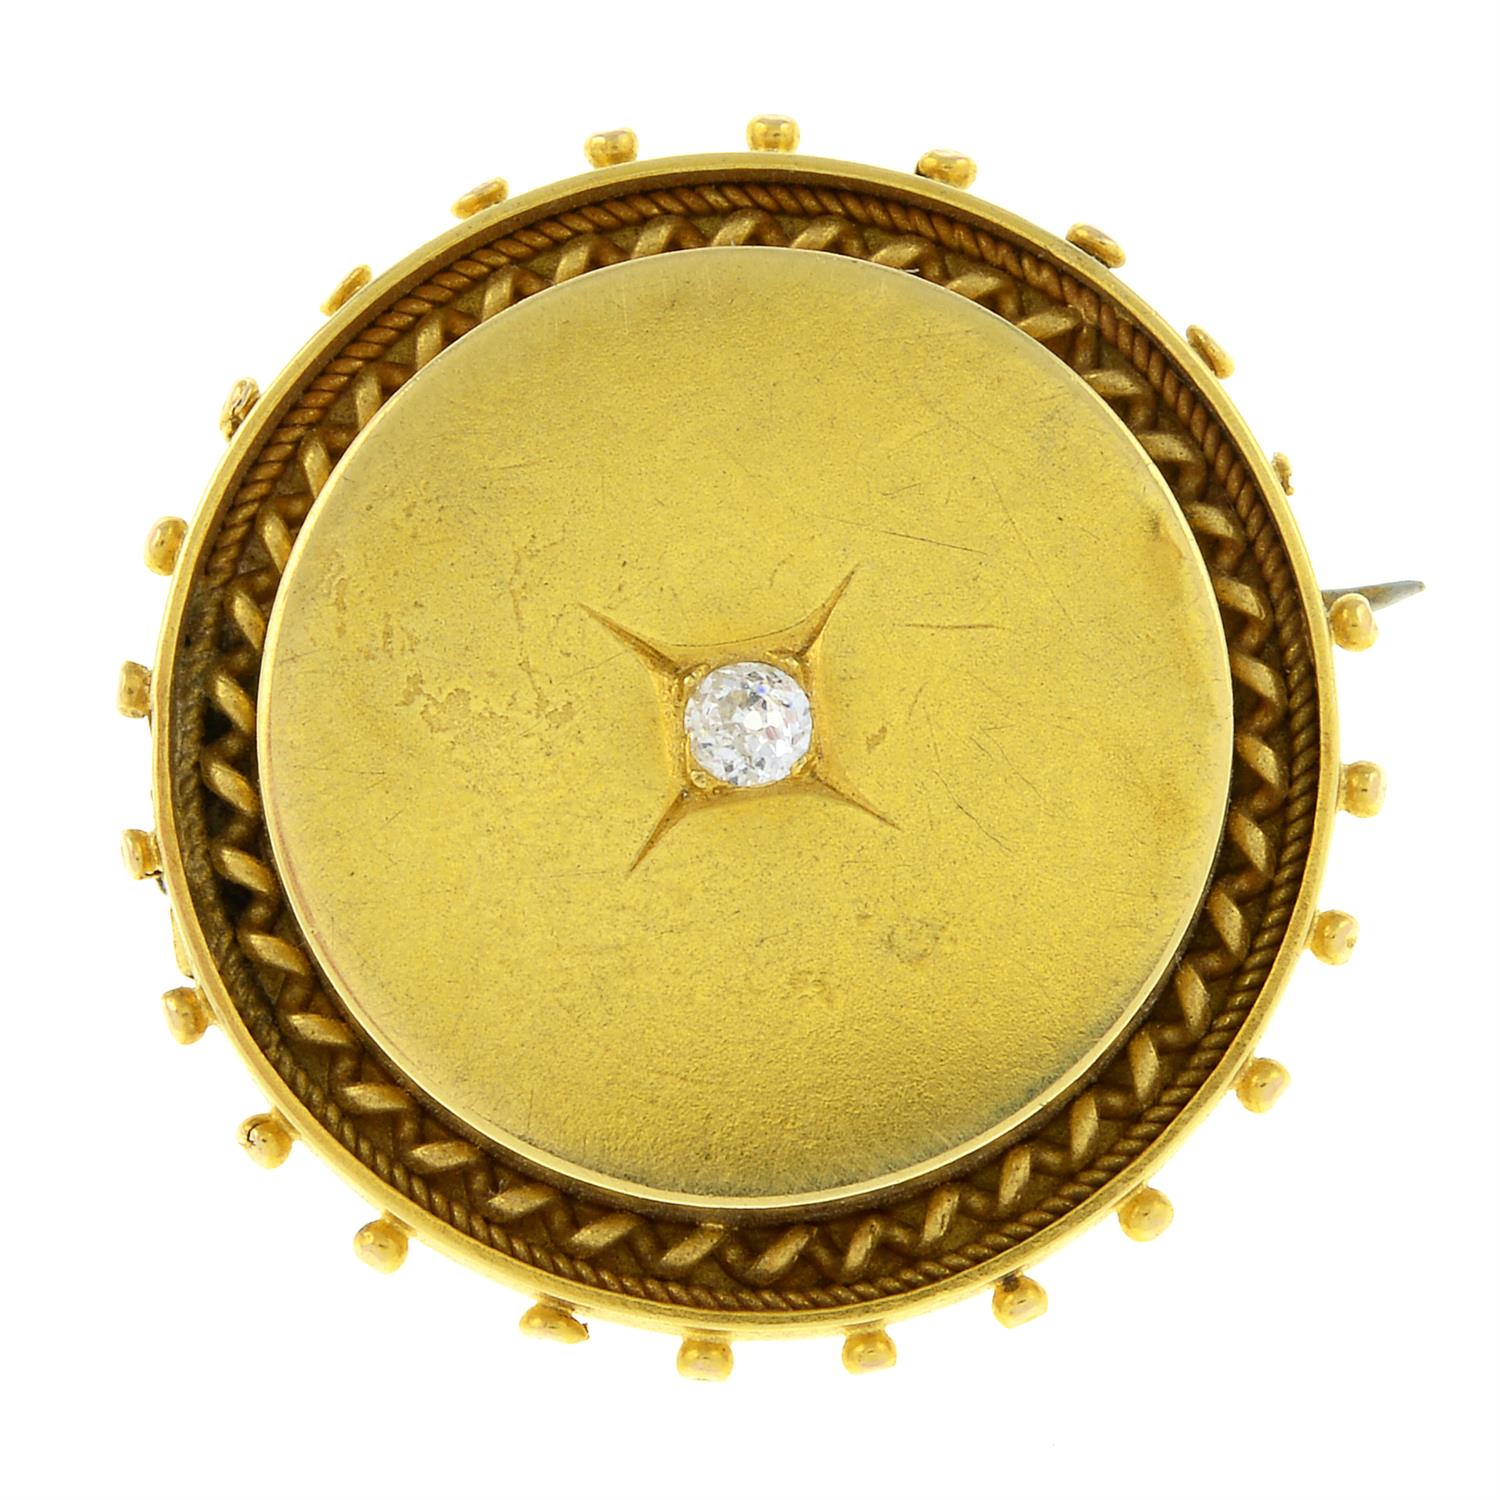 A late 19th century gold old-cut diamond brooch.